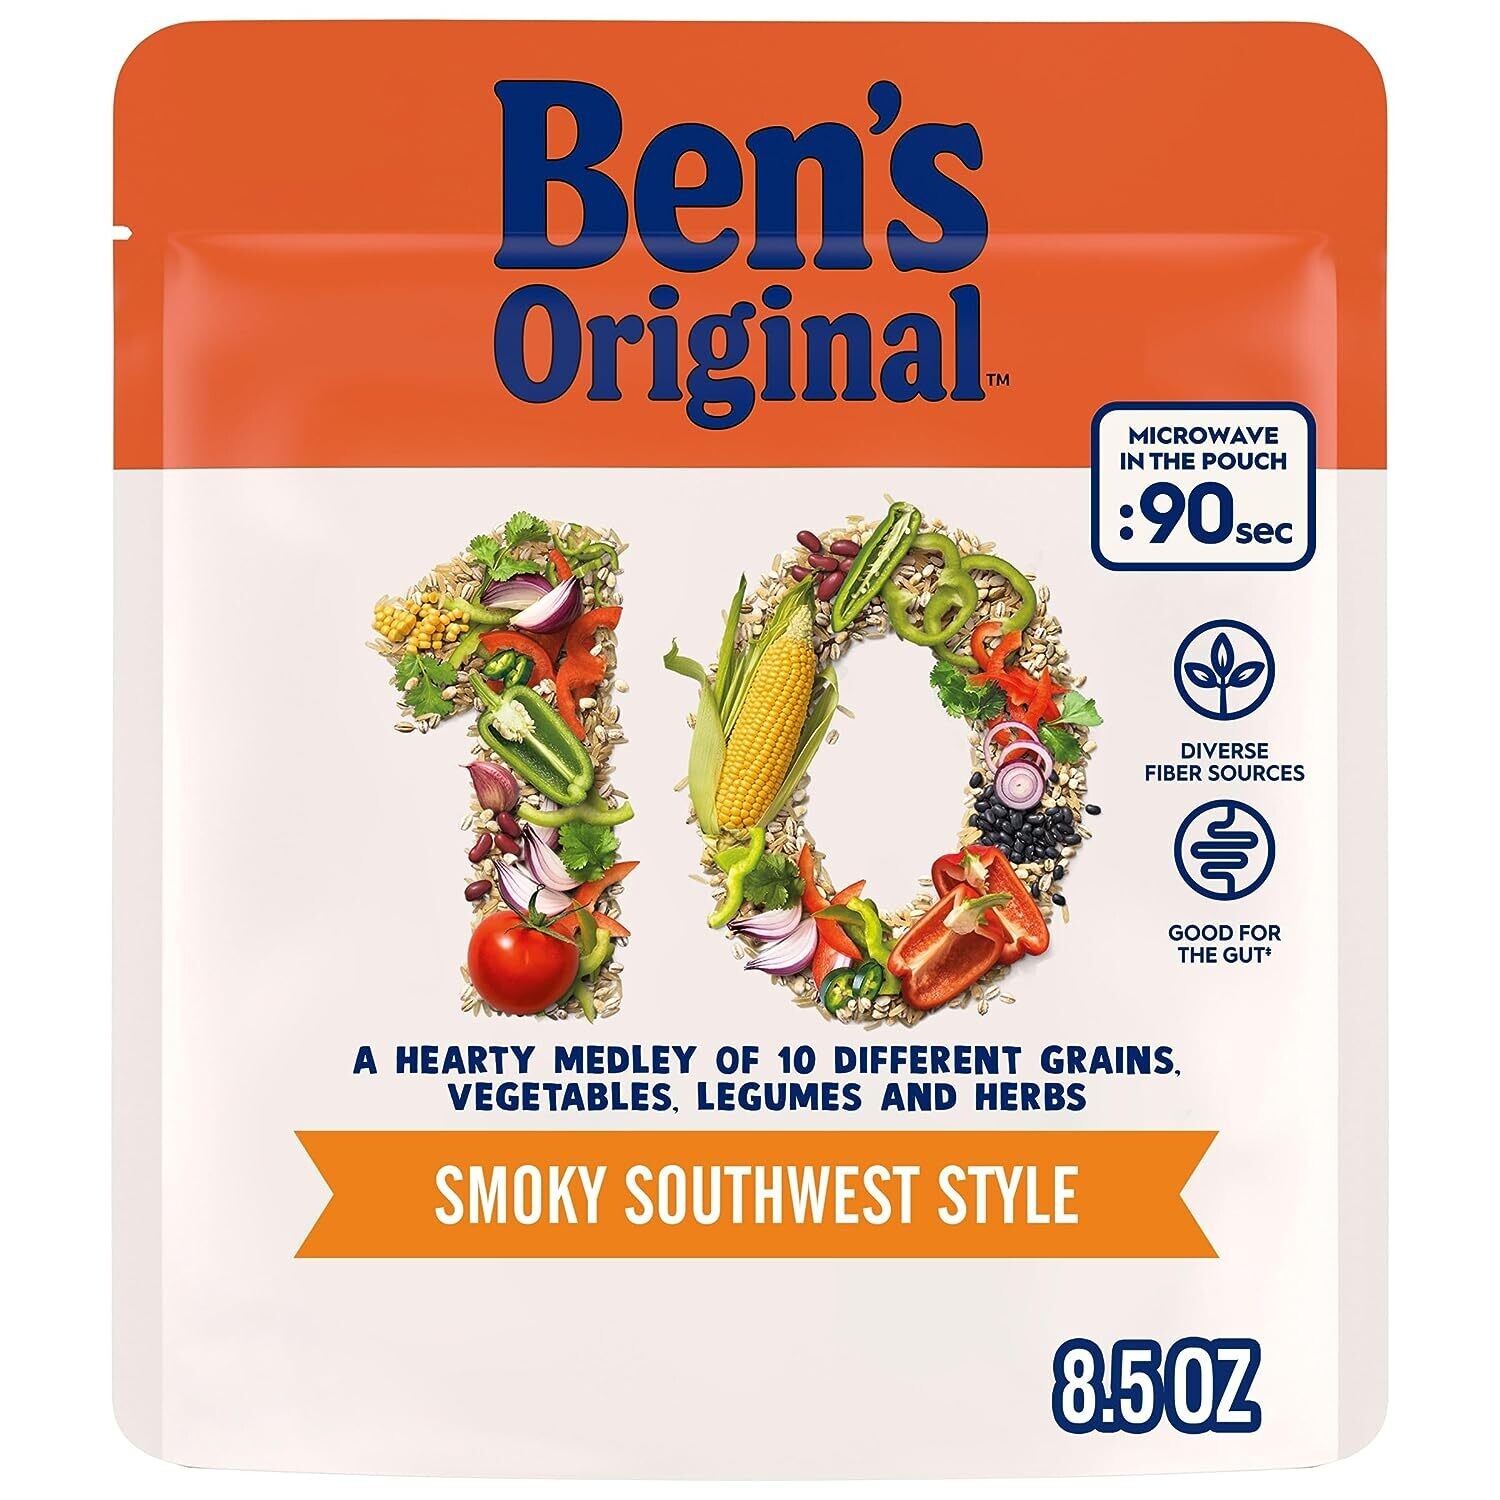 Ben's Original 10 Medley - Smoky Southwest Style